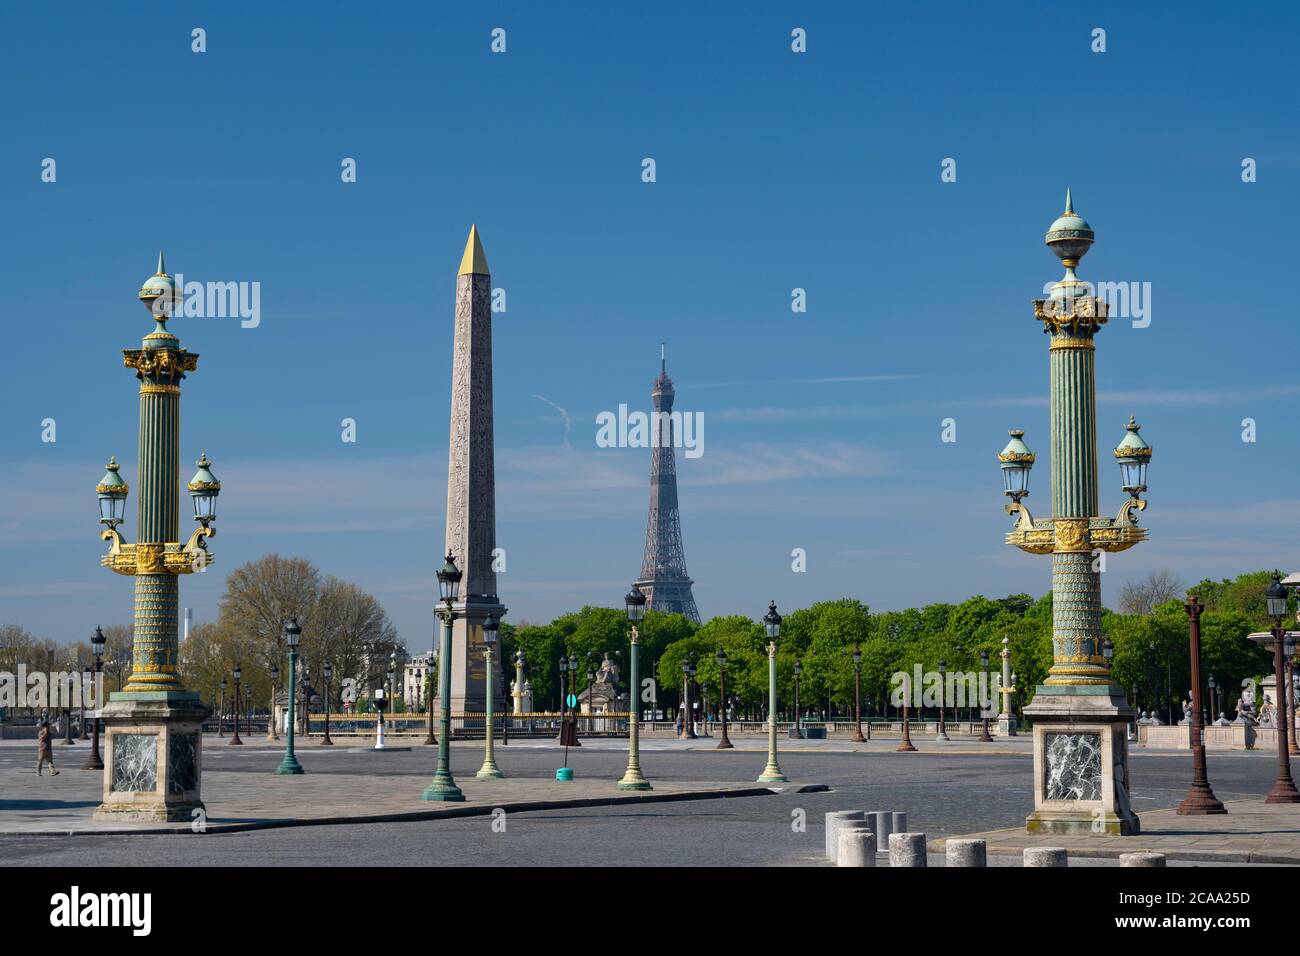 Place de la Concorde of Concorde Square is one of the major public squares in Paris, France Stock Photo